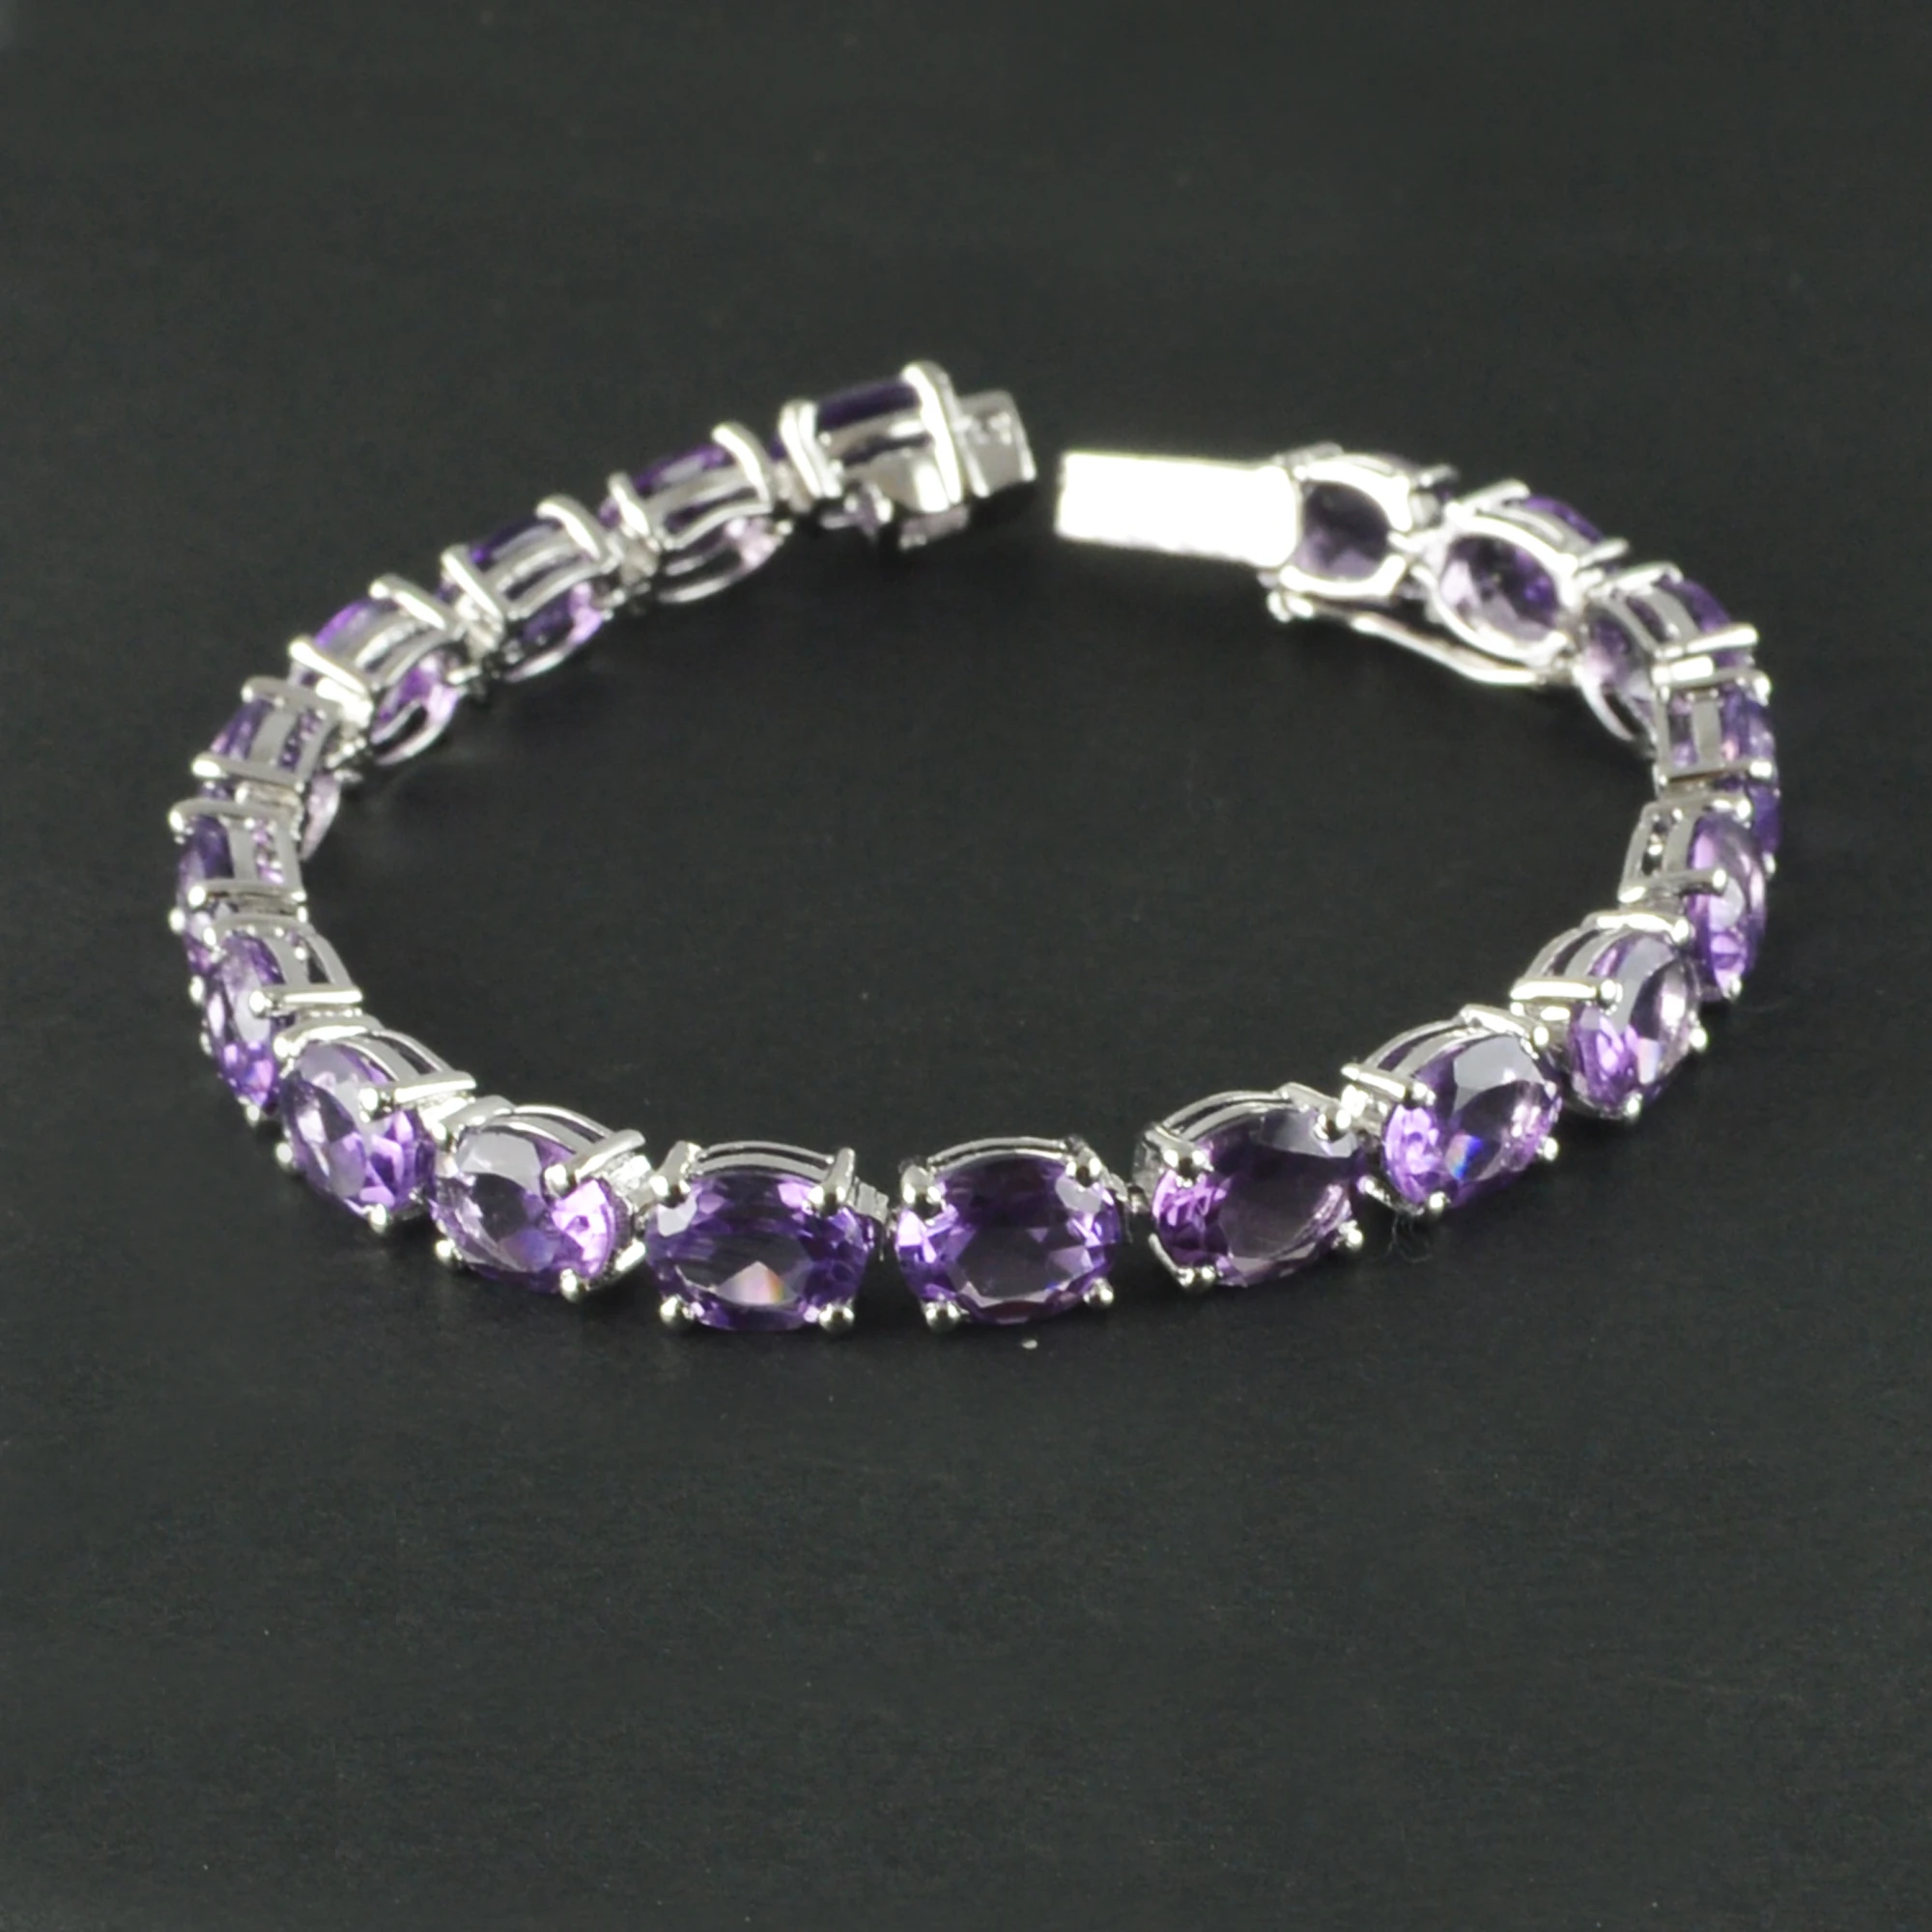 Best quality oval Amethyst gemstone bracelet 925 sterling silver tennis bracelet handmade wholesale jewelry supplier bracelet